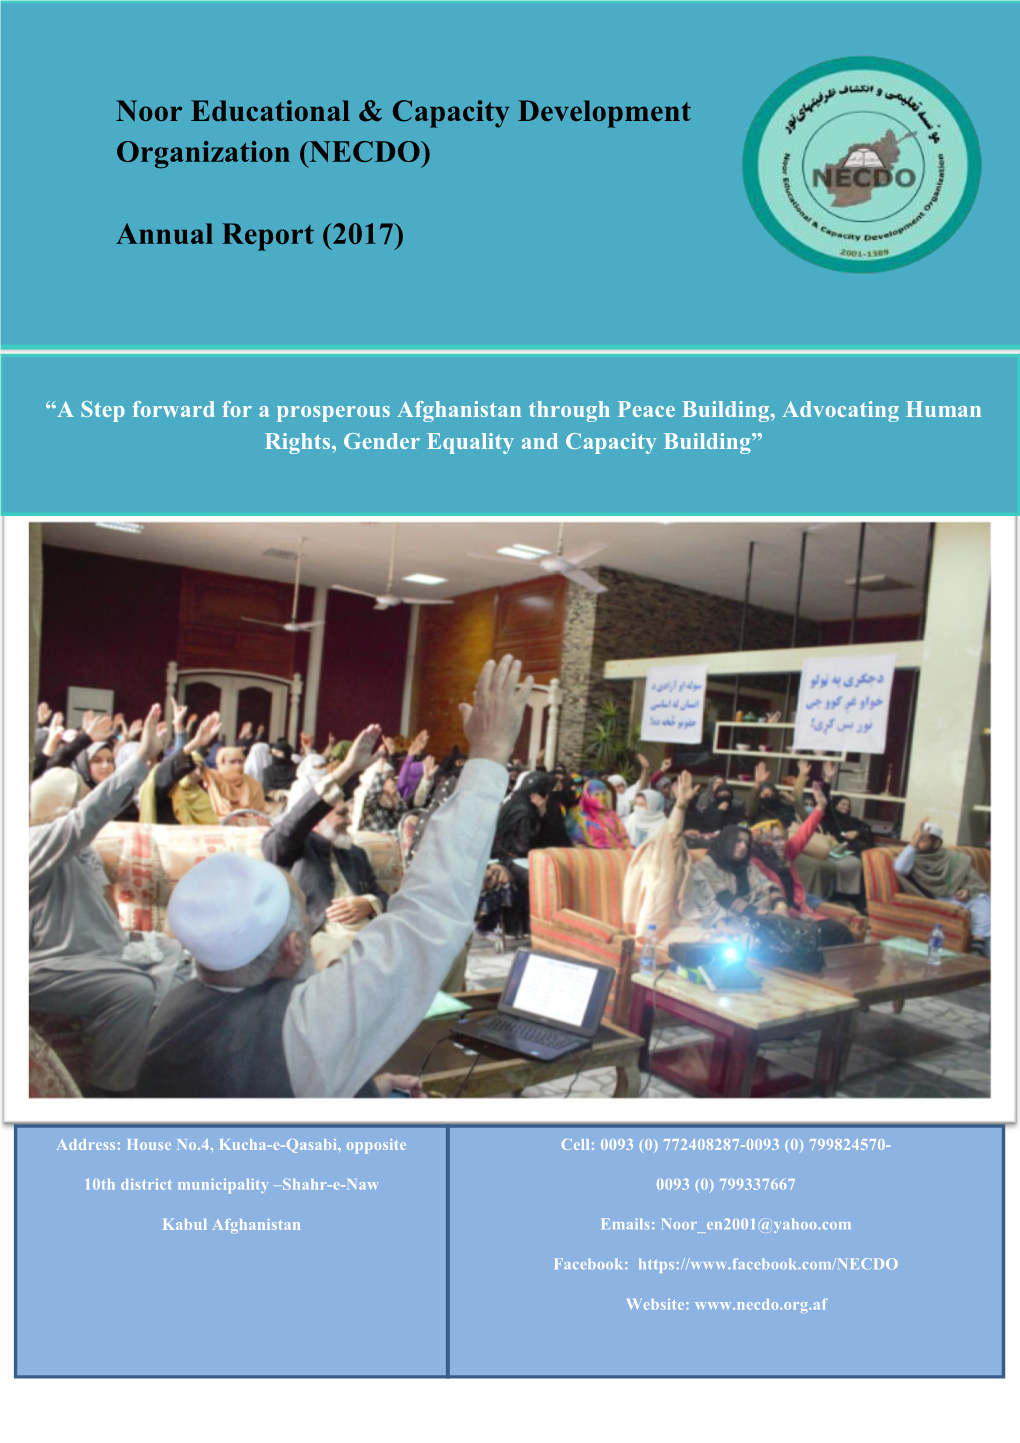 Noor Educational & Capacity Development Organization (NECDO) Annual Report (2017)